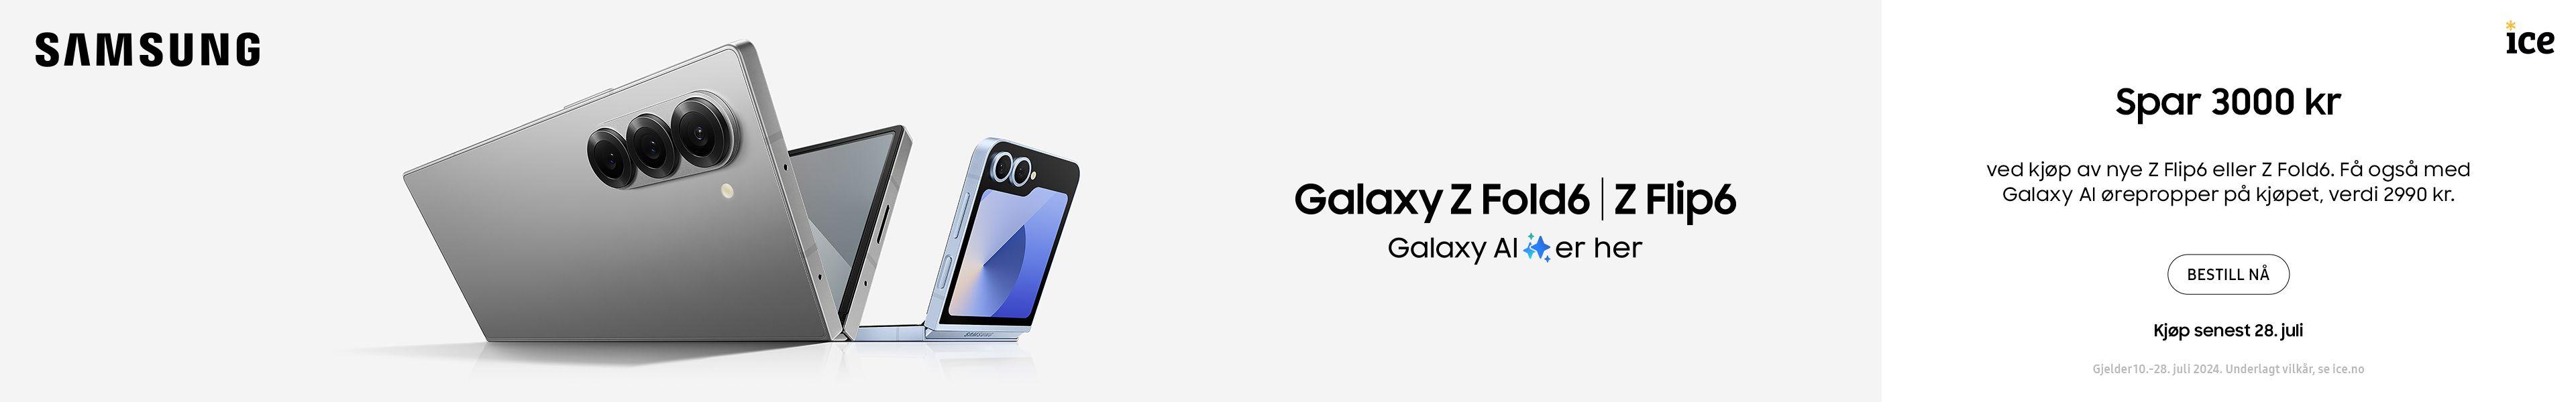 Galaxy Z Fold/Flip6 ink. AI ørepropper. Spar 3000kr